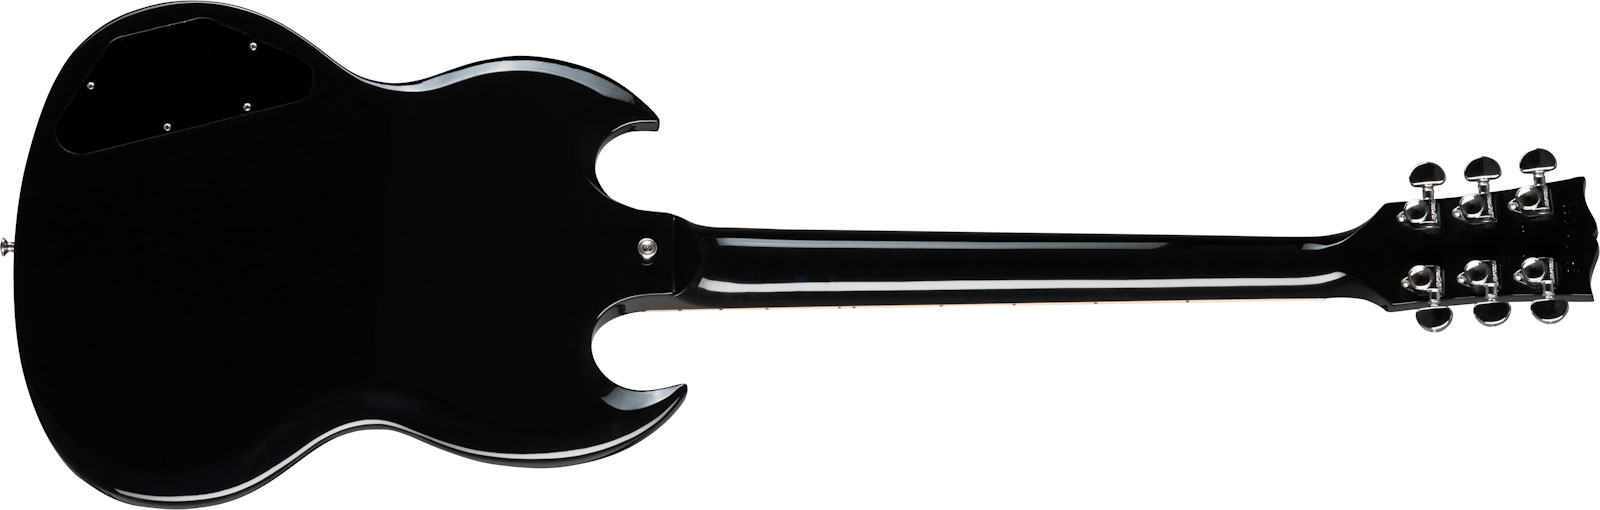 Gibson Sg Standard 2h Ht Rw - Ebony - Guitarra eléctrica de doble corte - Variation 1